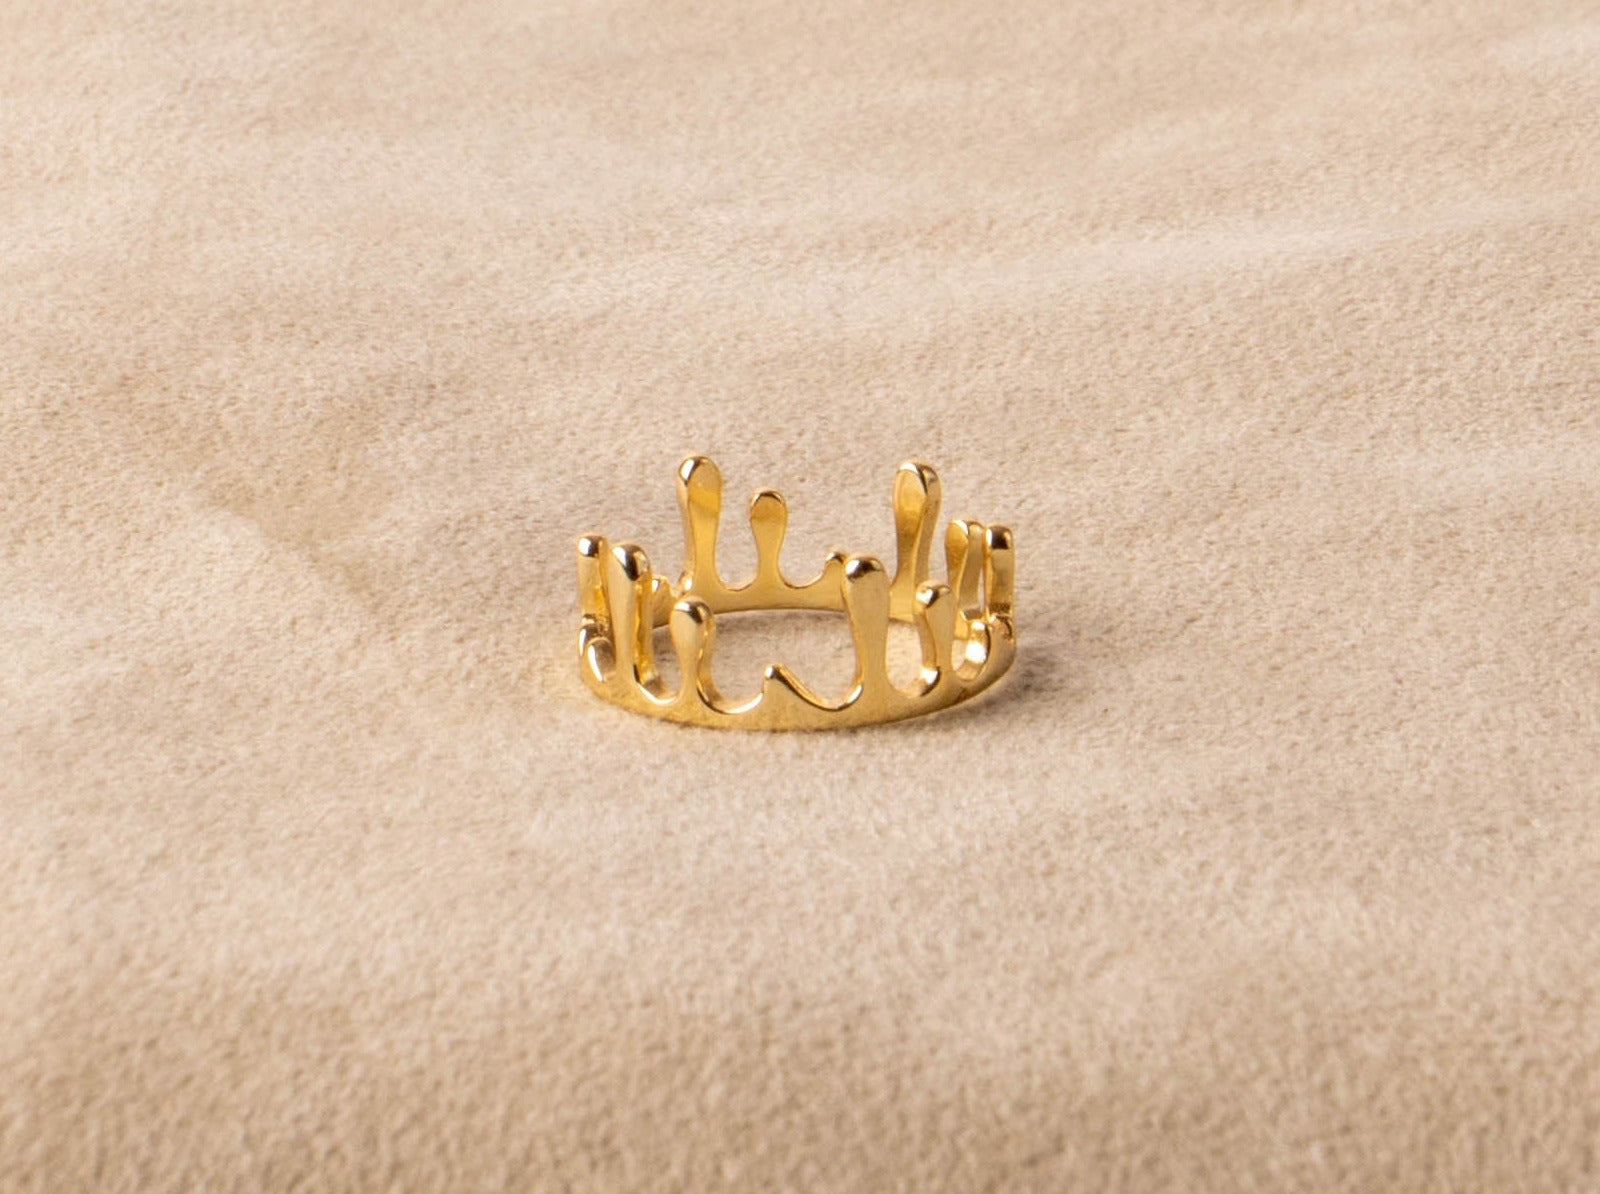 Feiner Goldring drippy Ring vergoldet handgemacht aus 925 Sterling Silber verstellbar